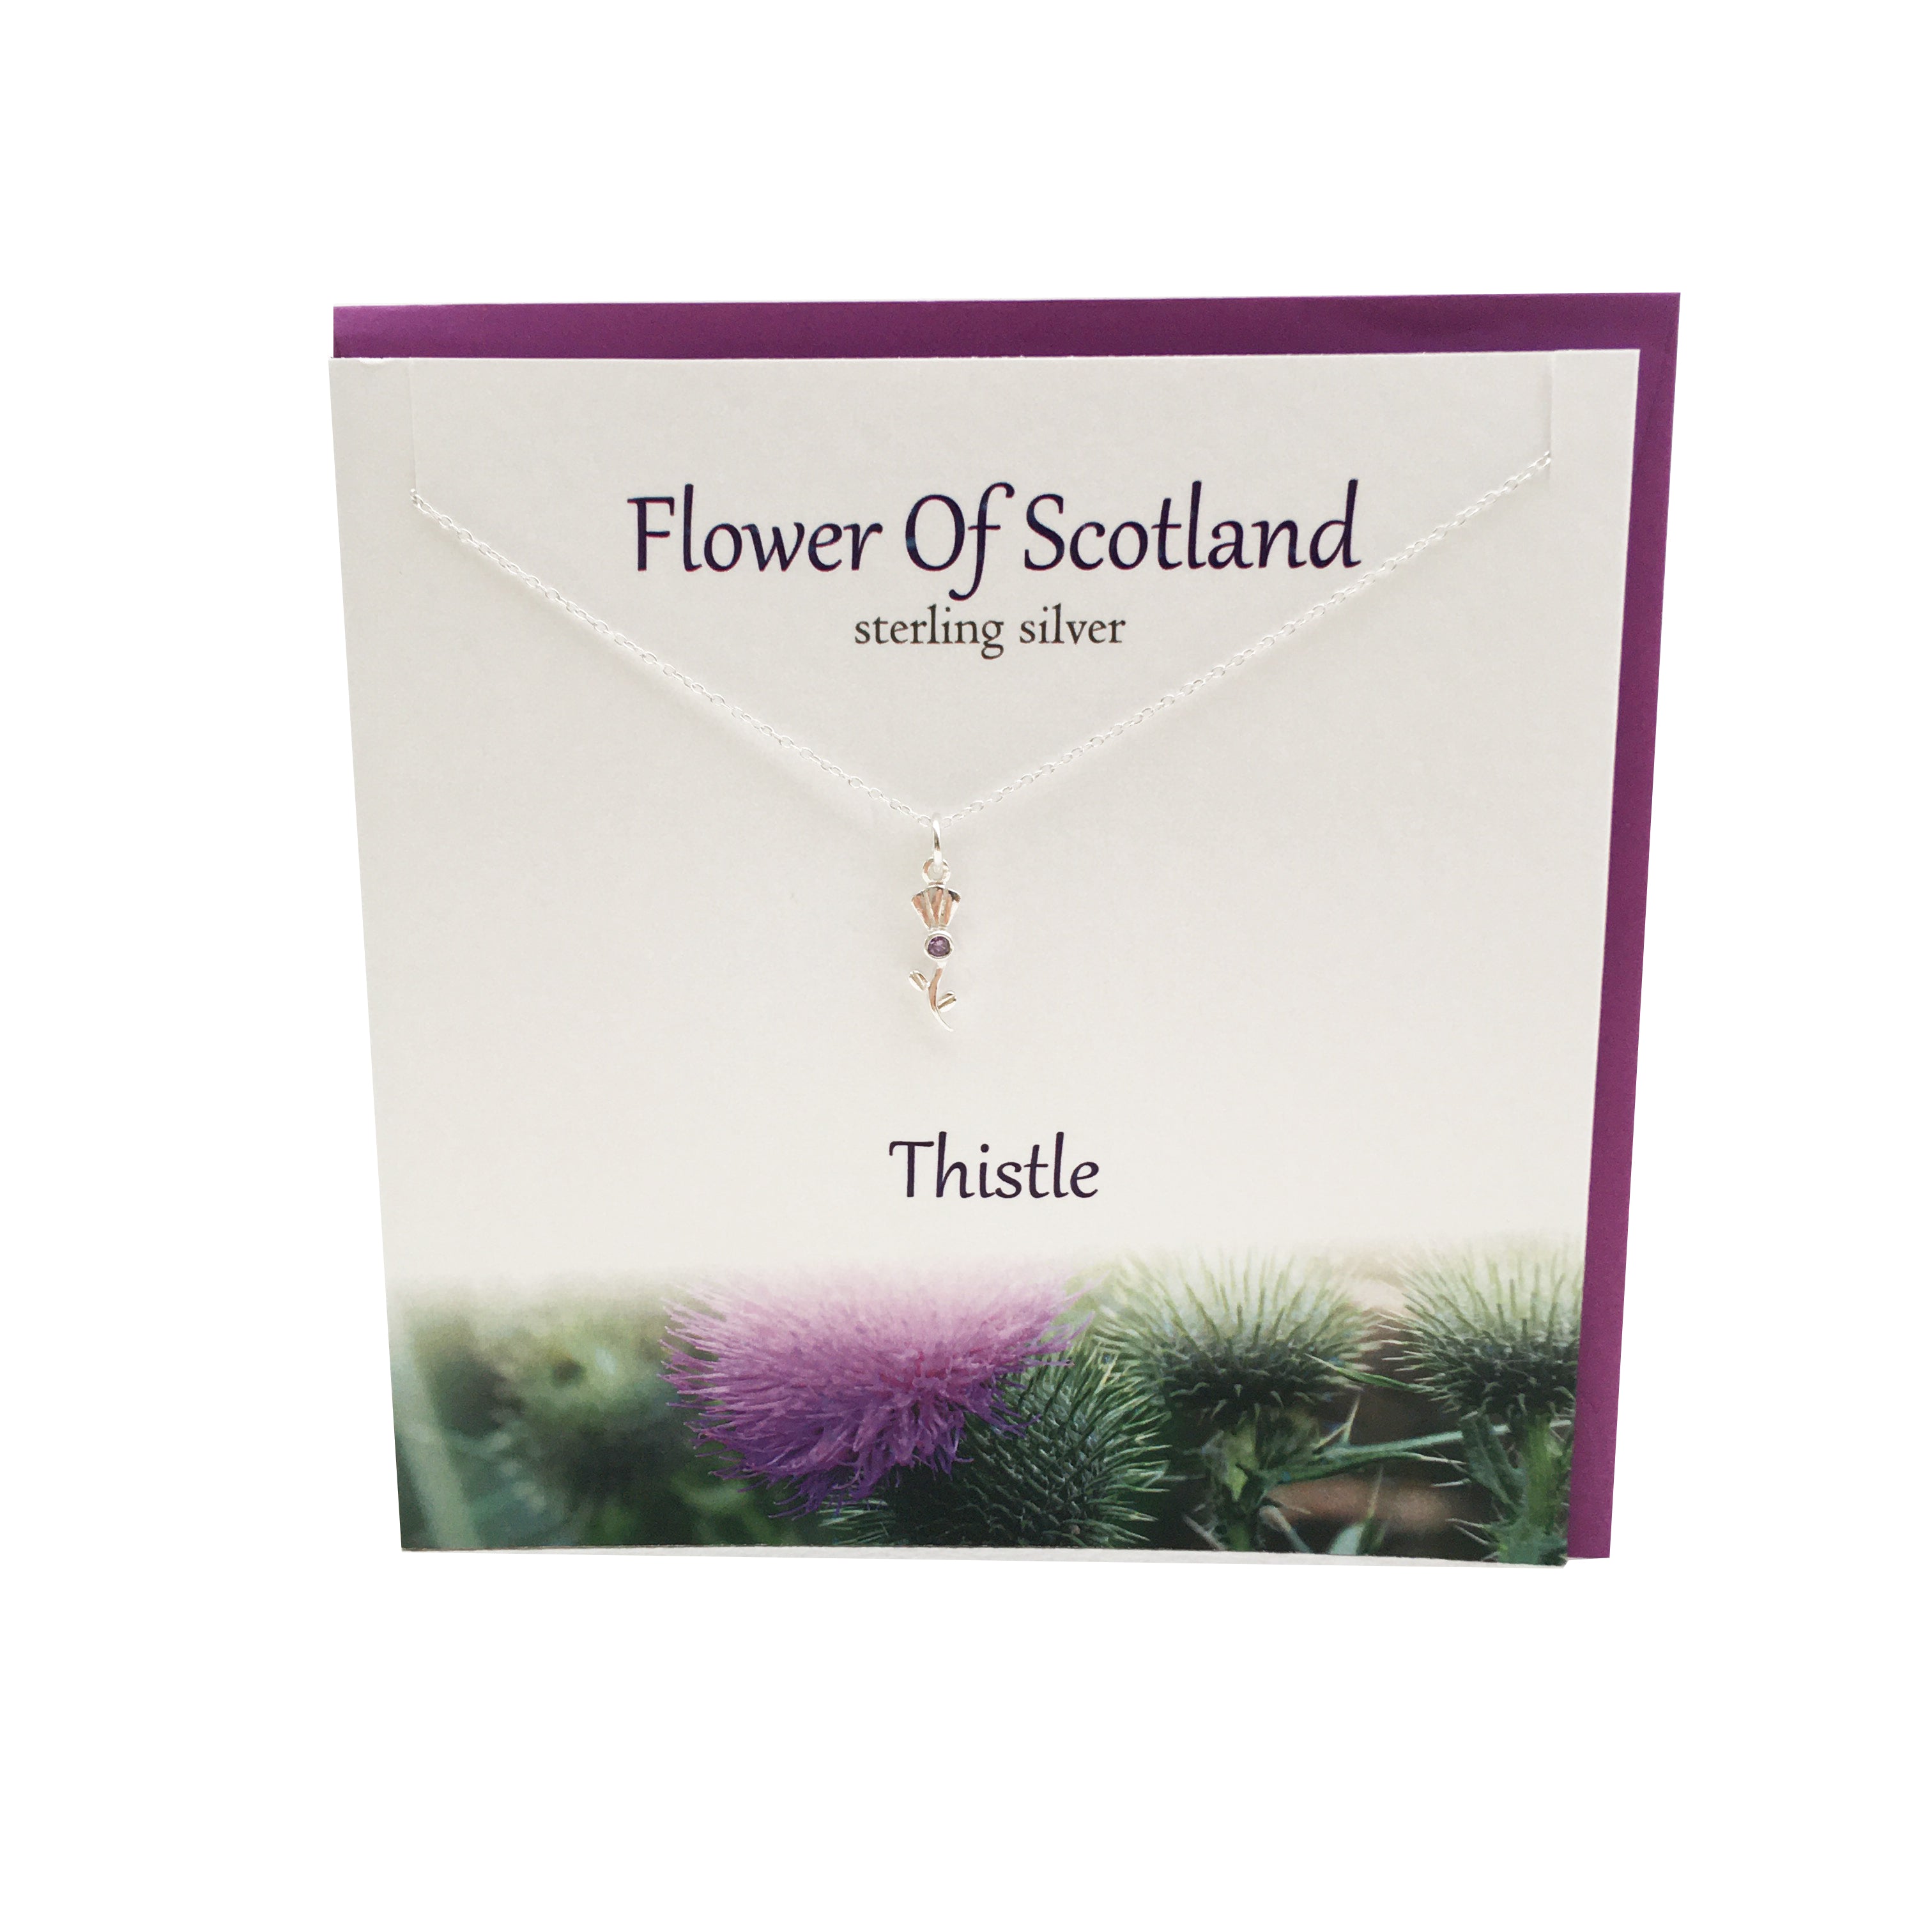 Flower Of Scotland Thistle silver pendant | The Silver Studio Scotland